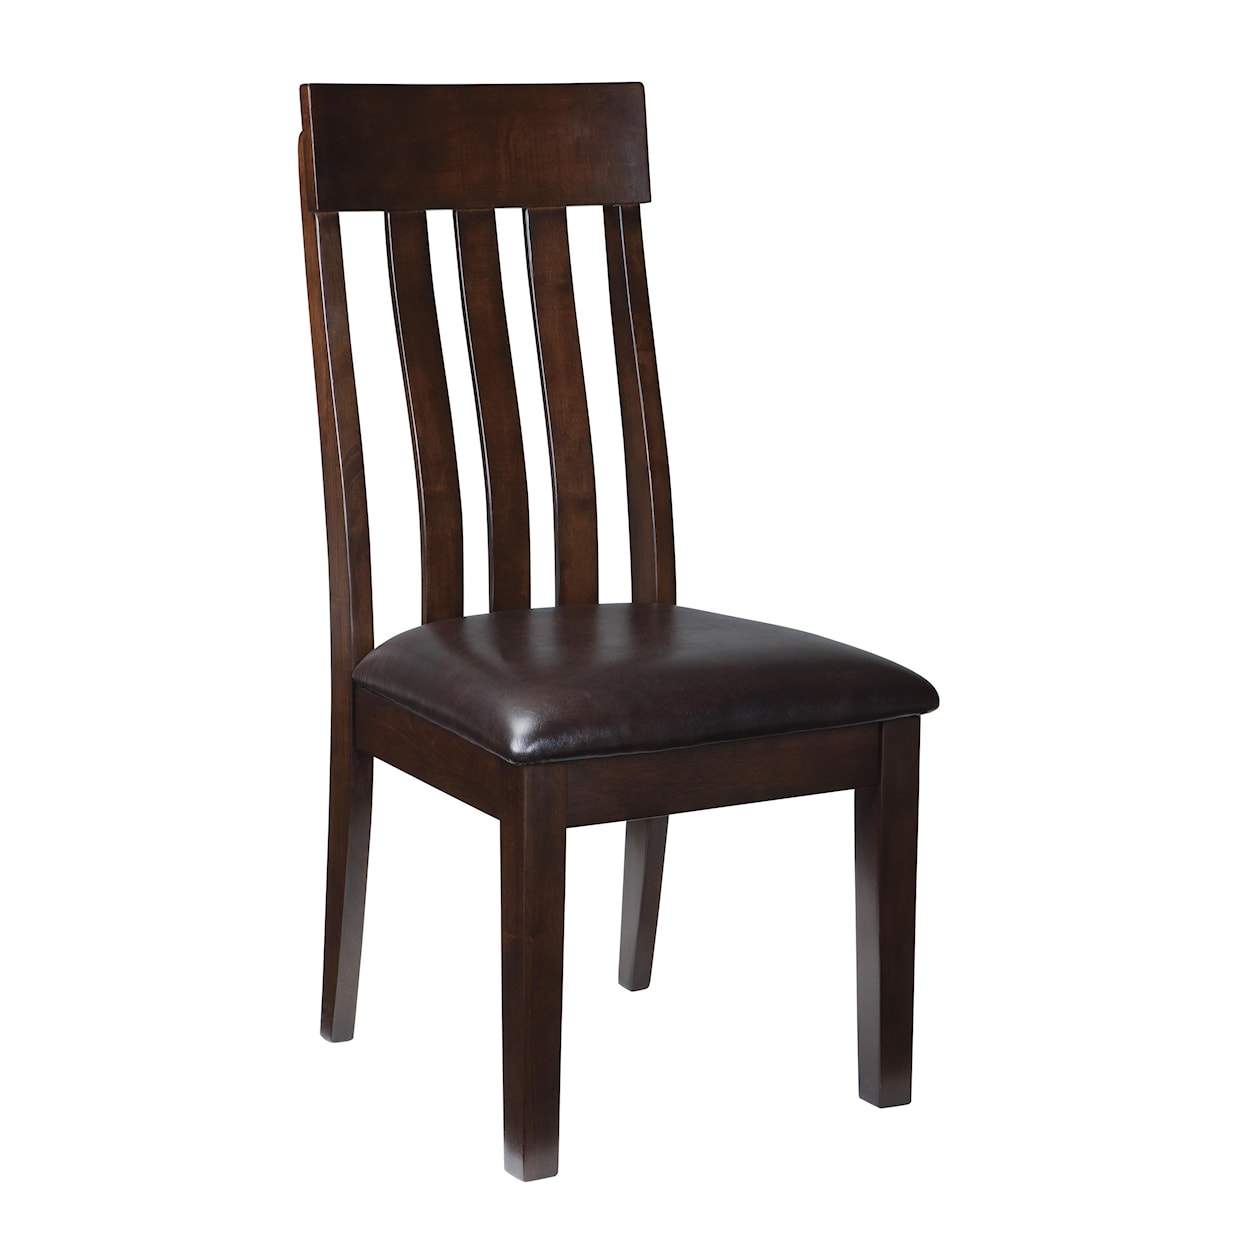 Michael Alan Select Haddigan 5-Piece Dining Room Table & Side Chair Set